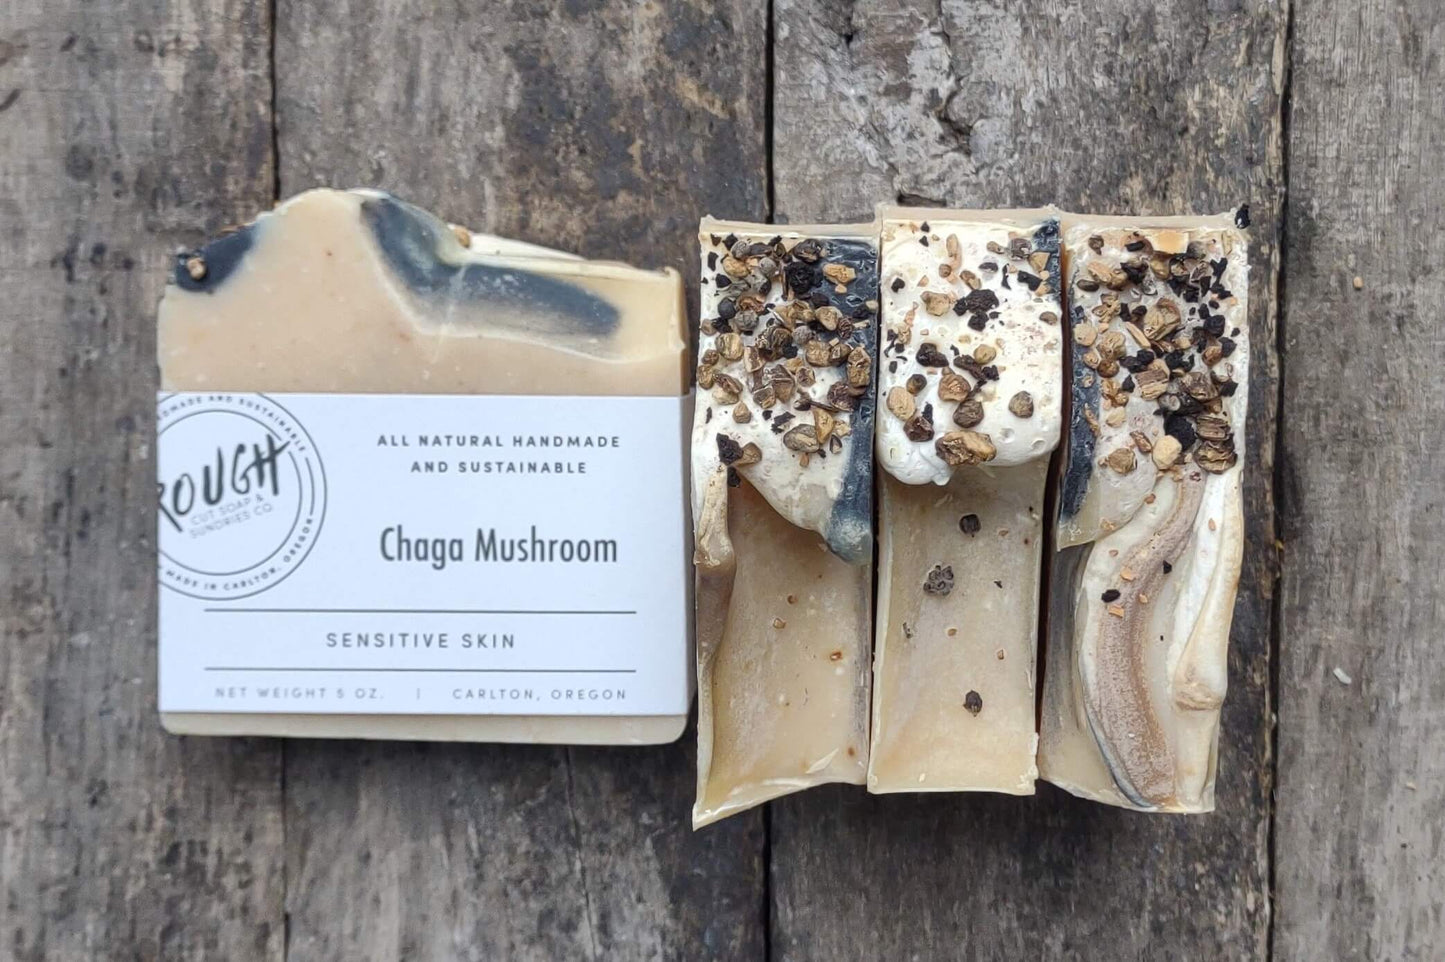 Chaga Mushroom Handcrafted Artisan Rough Cut Soap